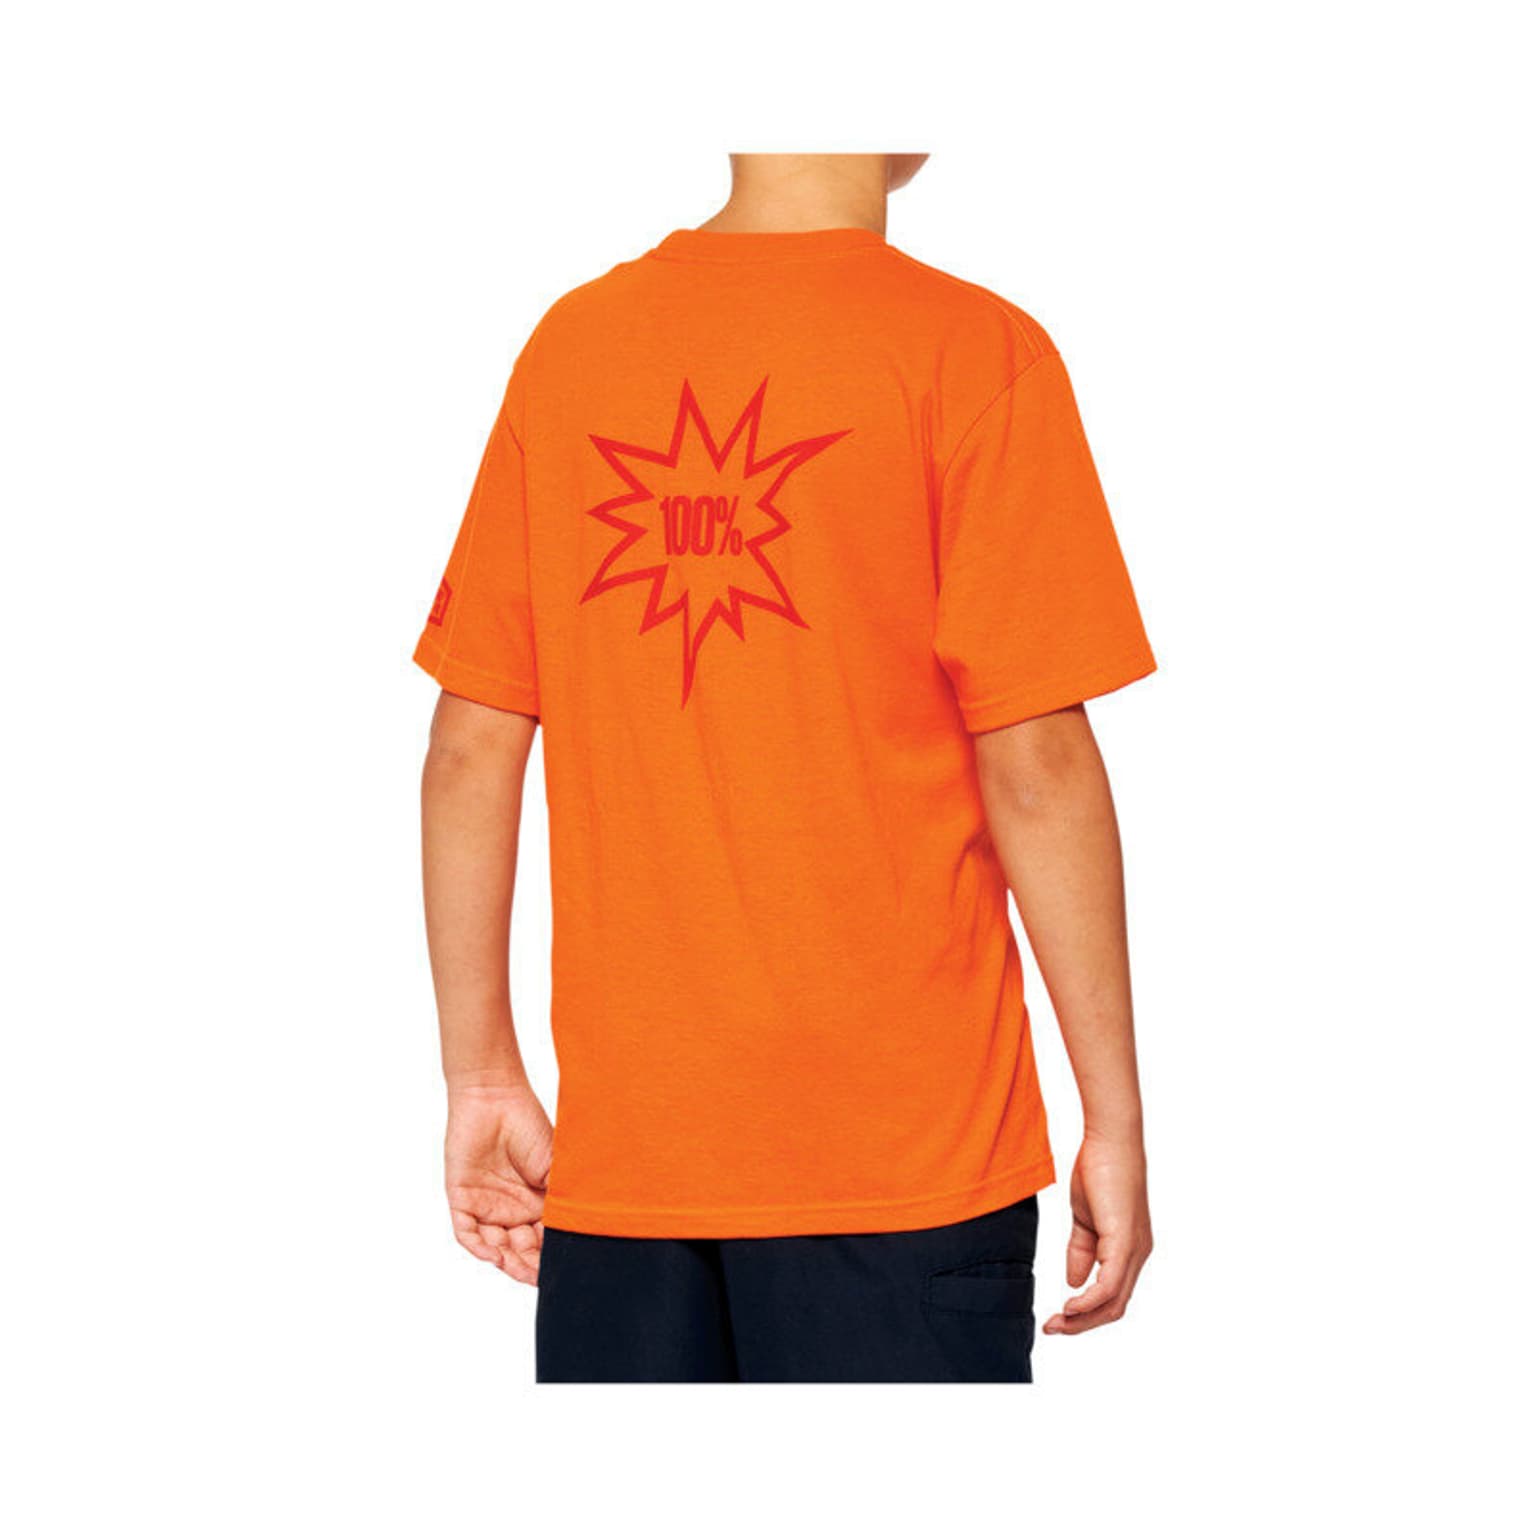 100% 100% Smash Youth T-Shirt arancio 2